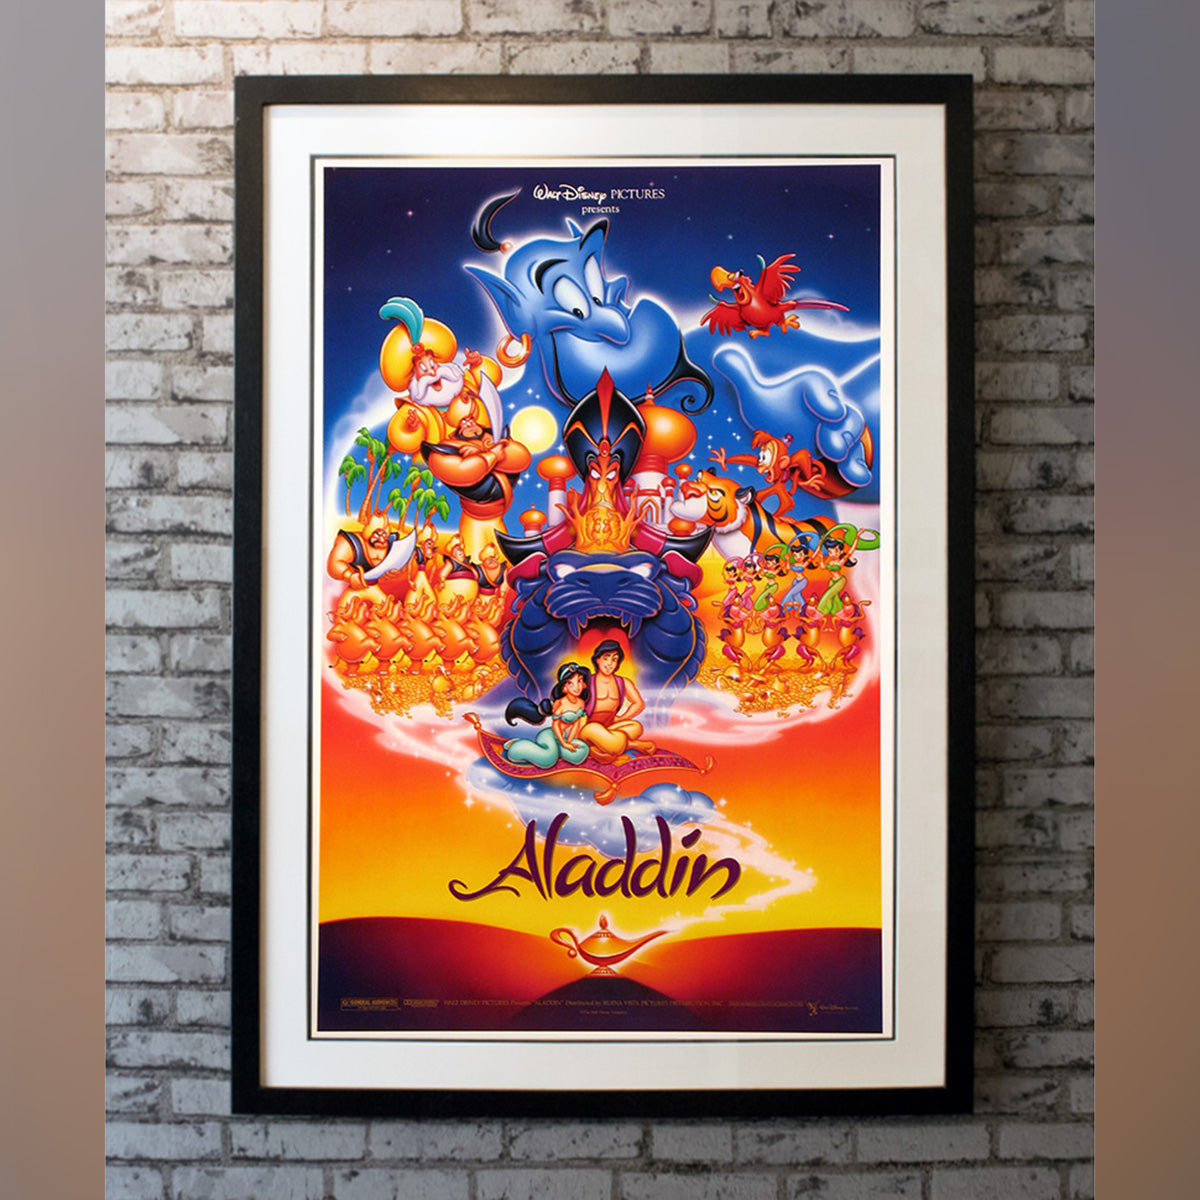 Original Movie Poster of Aladdin (1992)